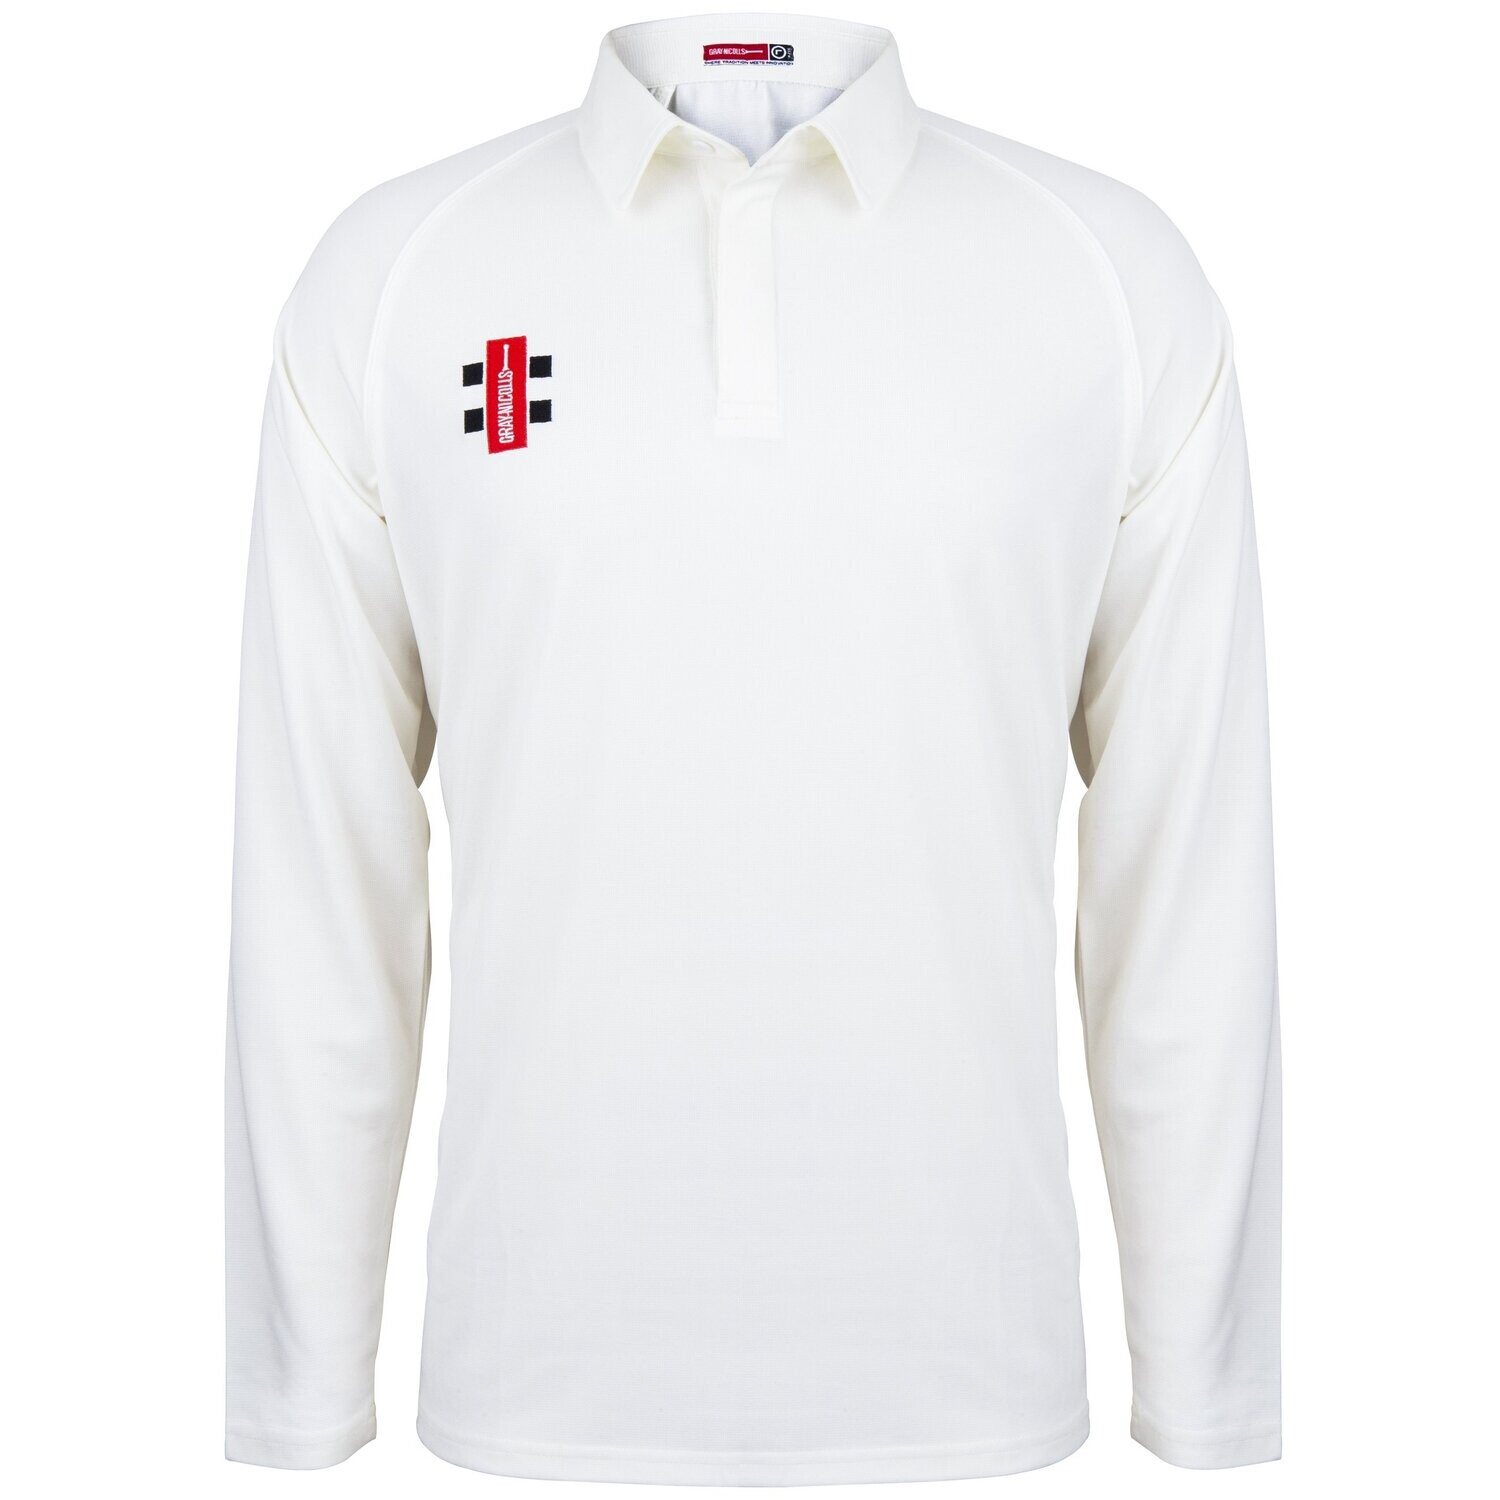 Gray-Nicolls Matrix V2 Long Sleeve Cricket Shirt